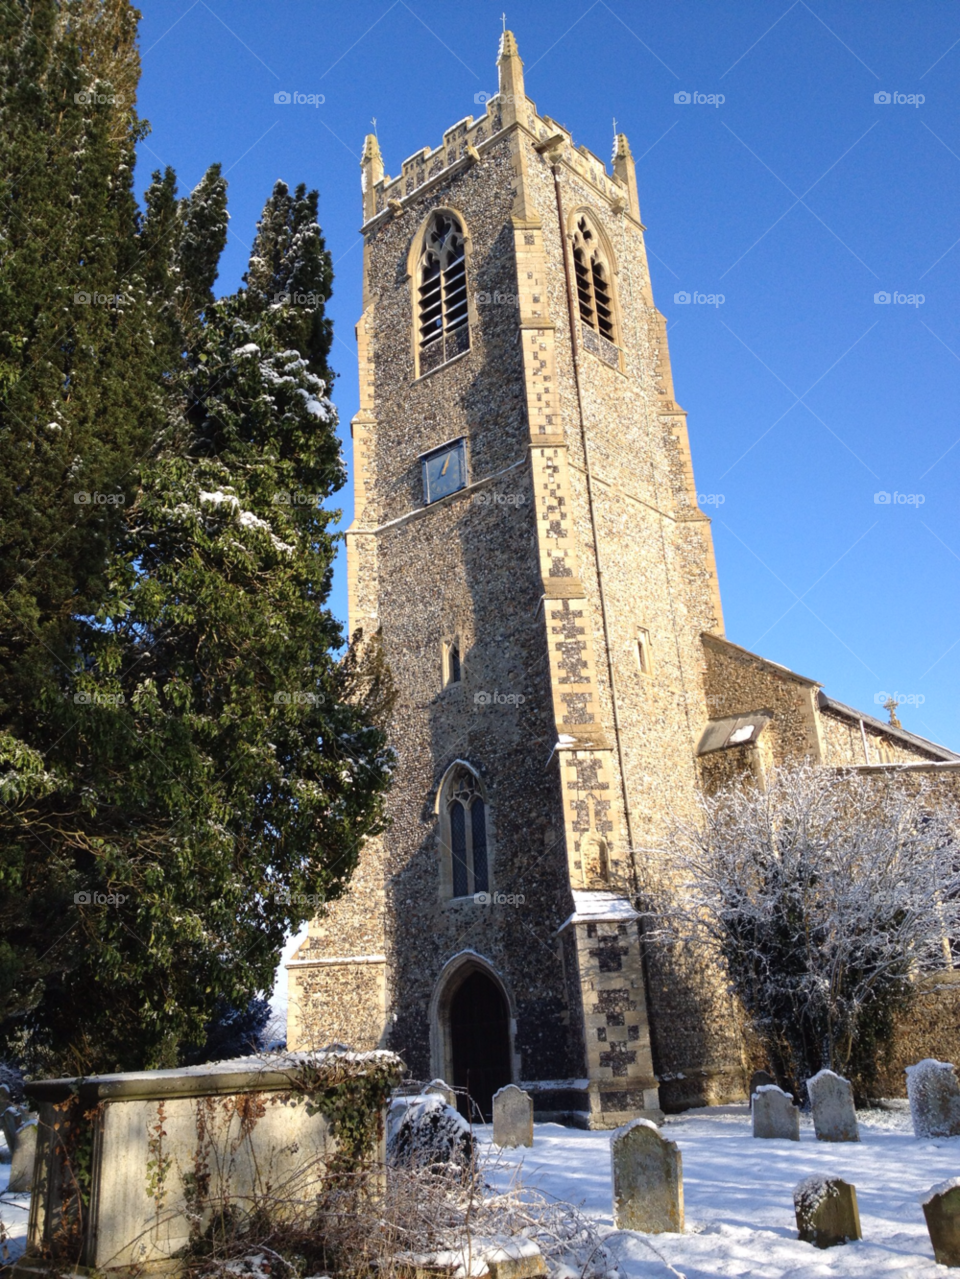 pulham st mary norfolk snow trees church by sunnydee